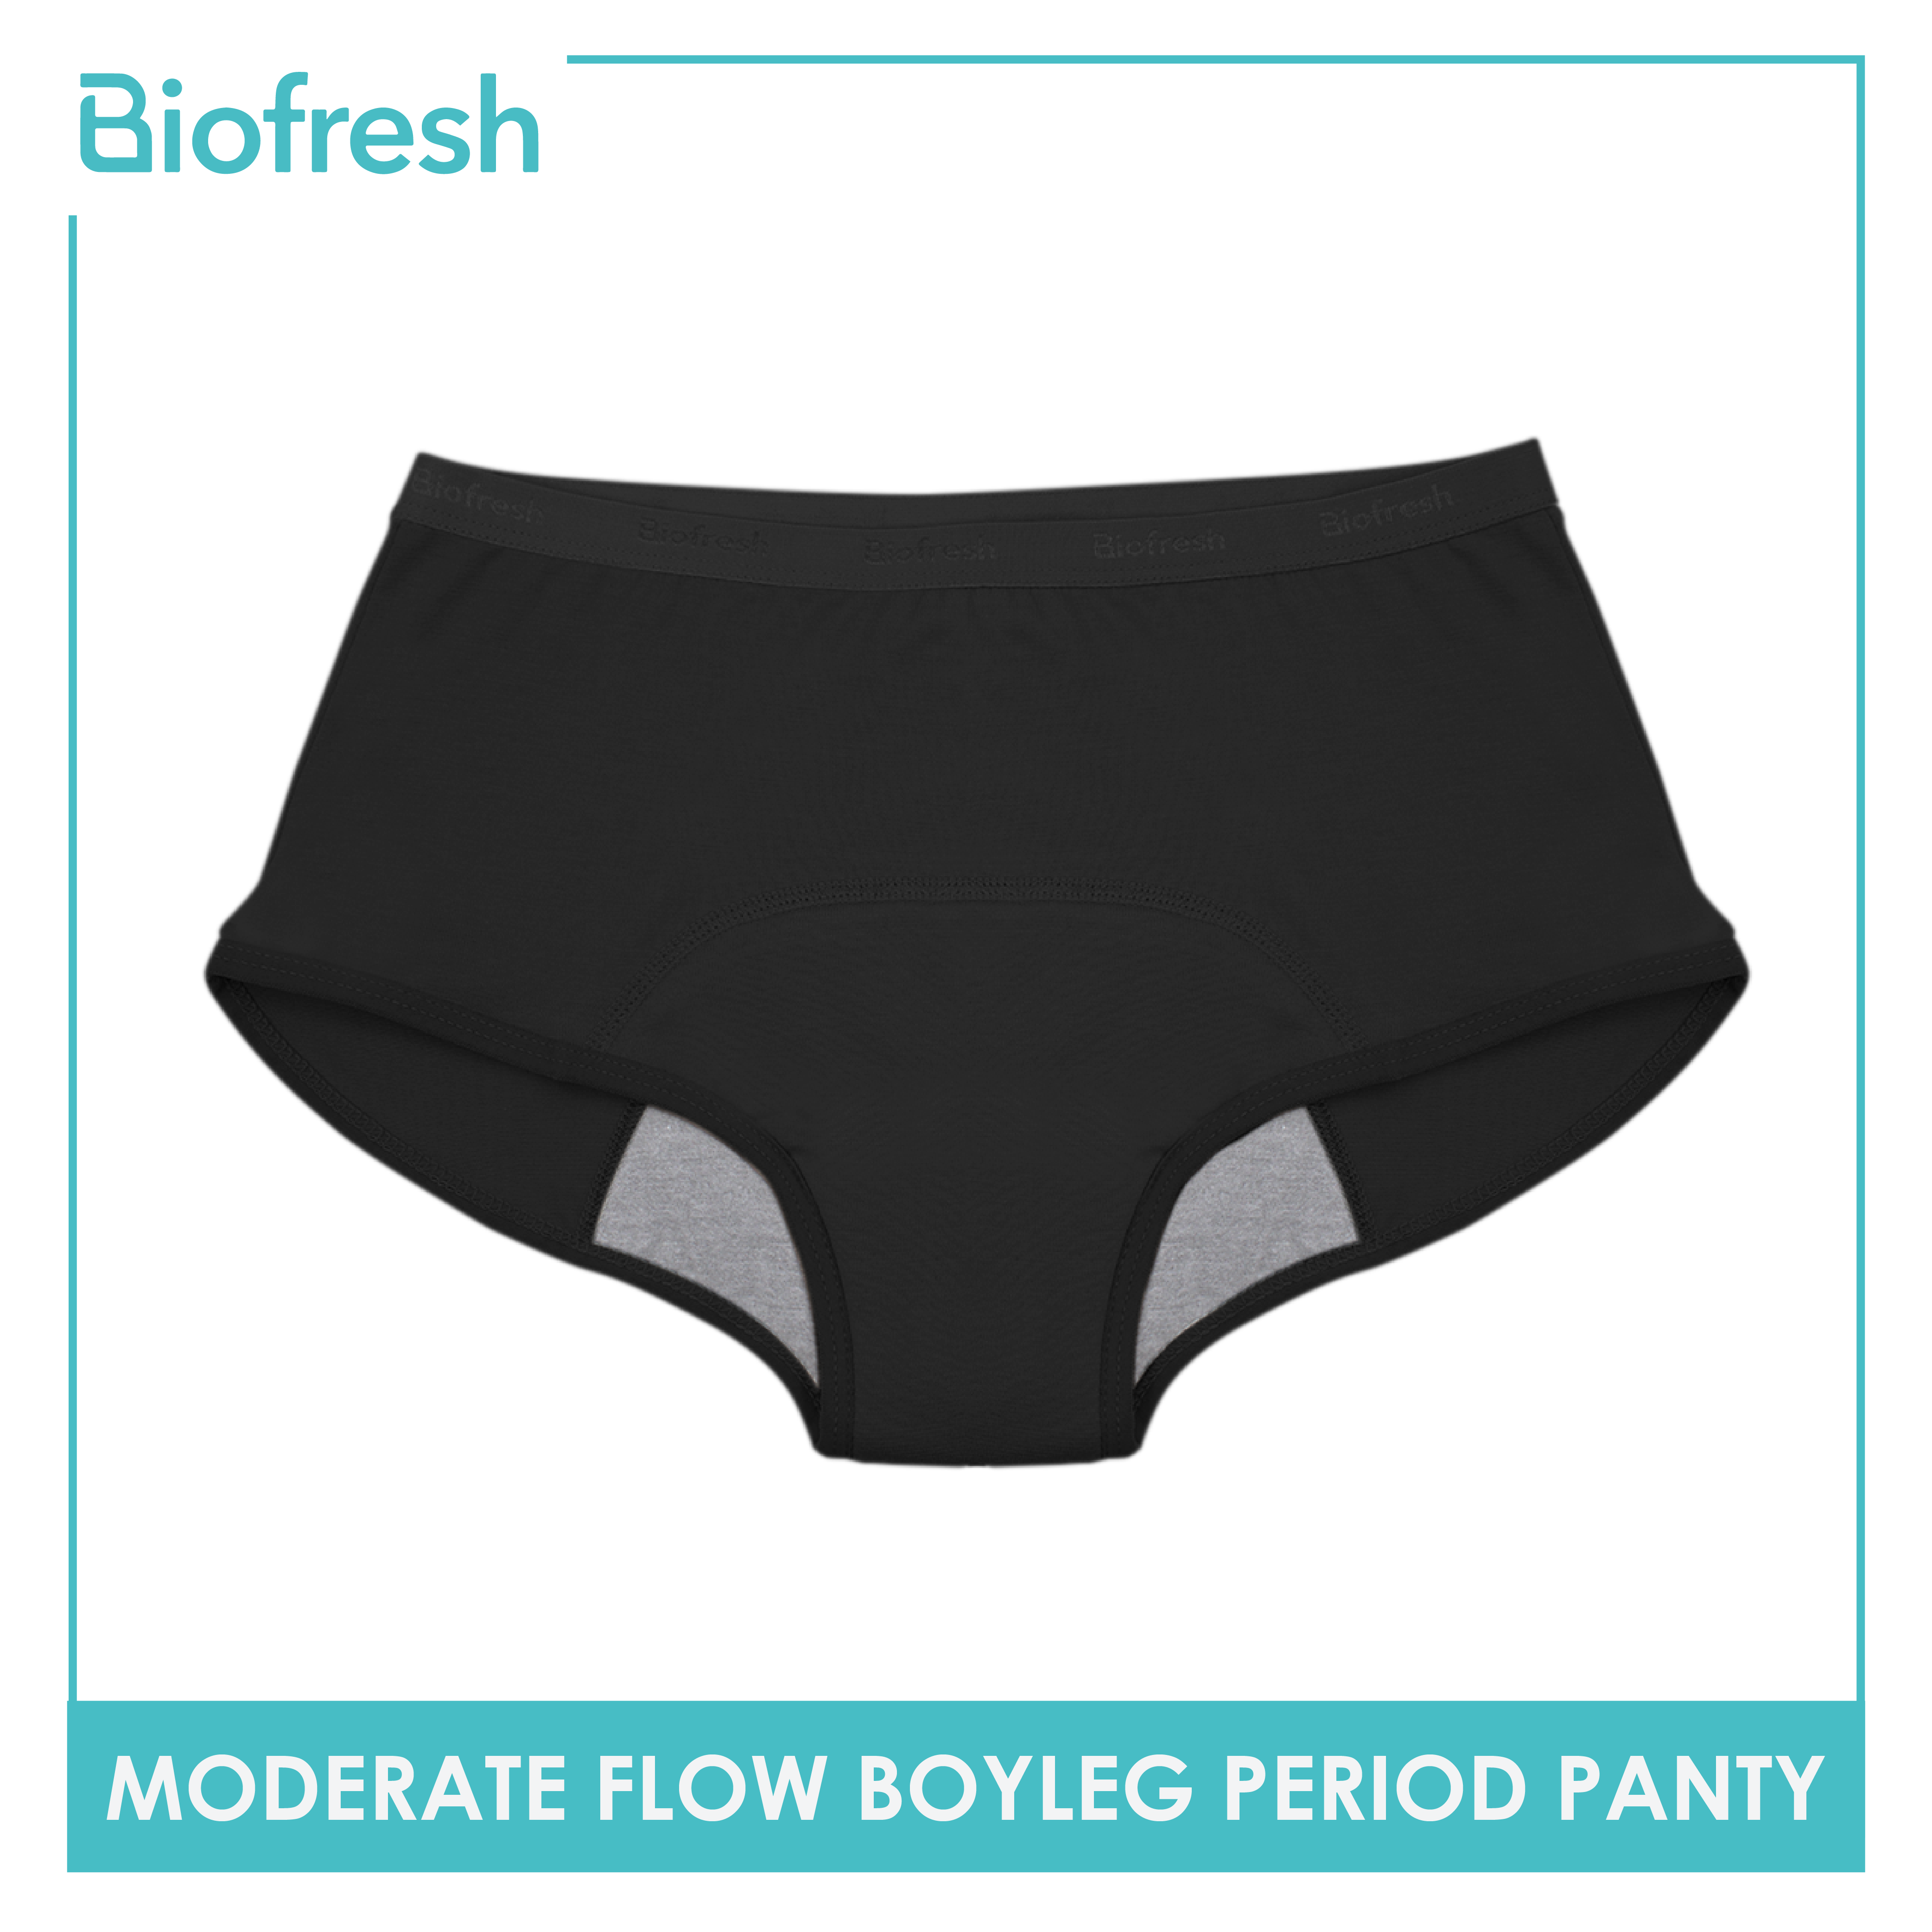 Ladies' Boyleg Period Panty